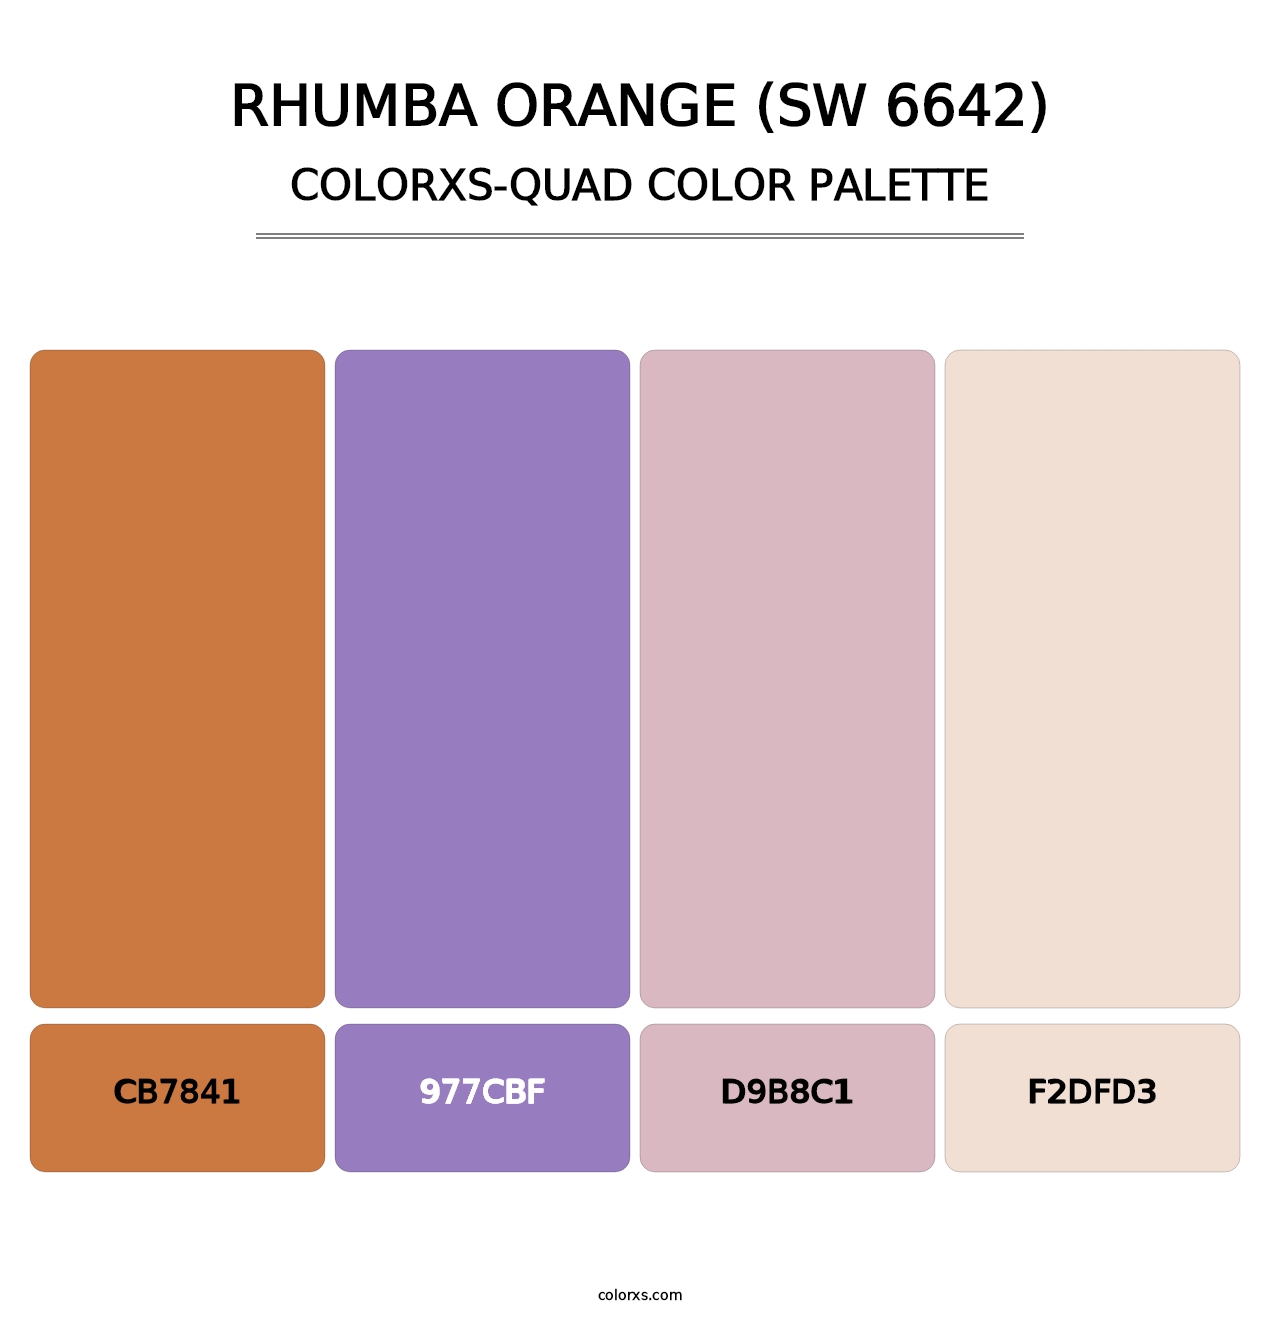 Rhumba Orange (SW 6642) - Colorxs Quad Palette